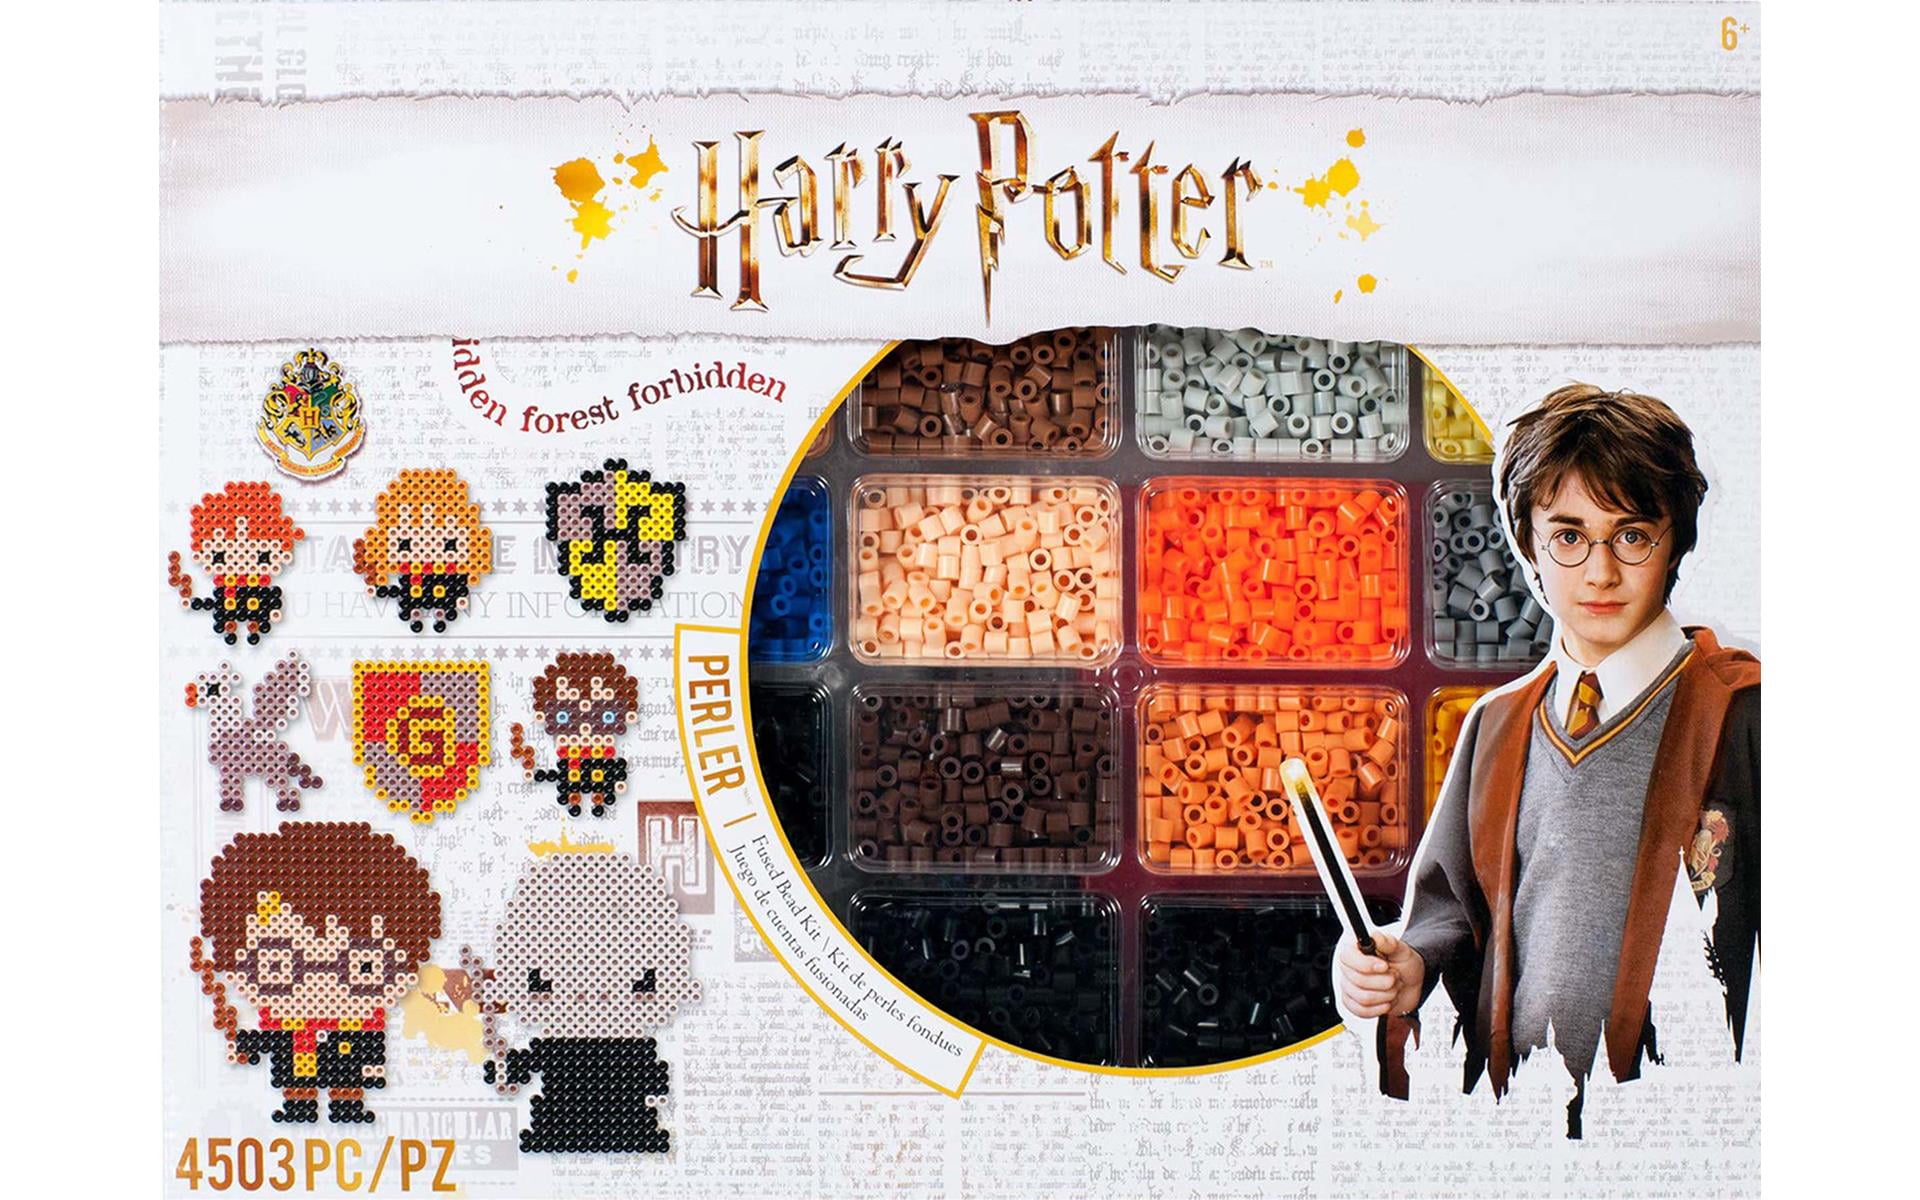 Perler Deluxe Fused Bead Kit - Harry Potter